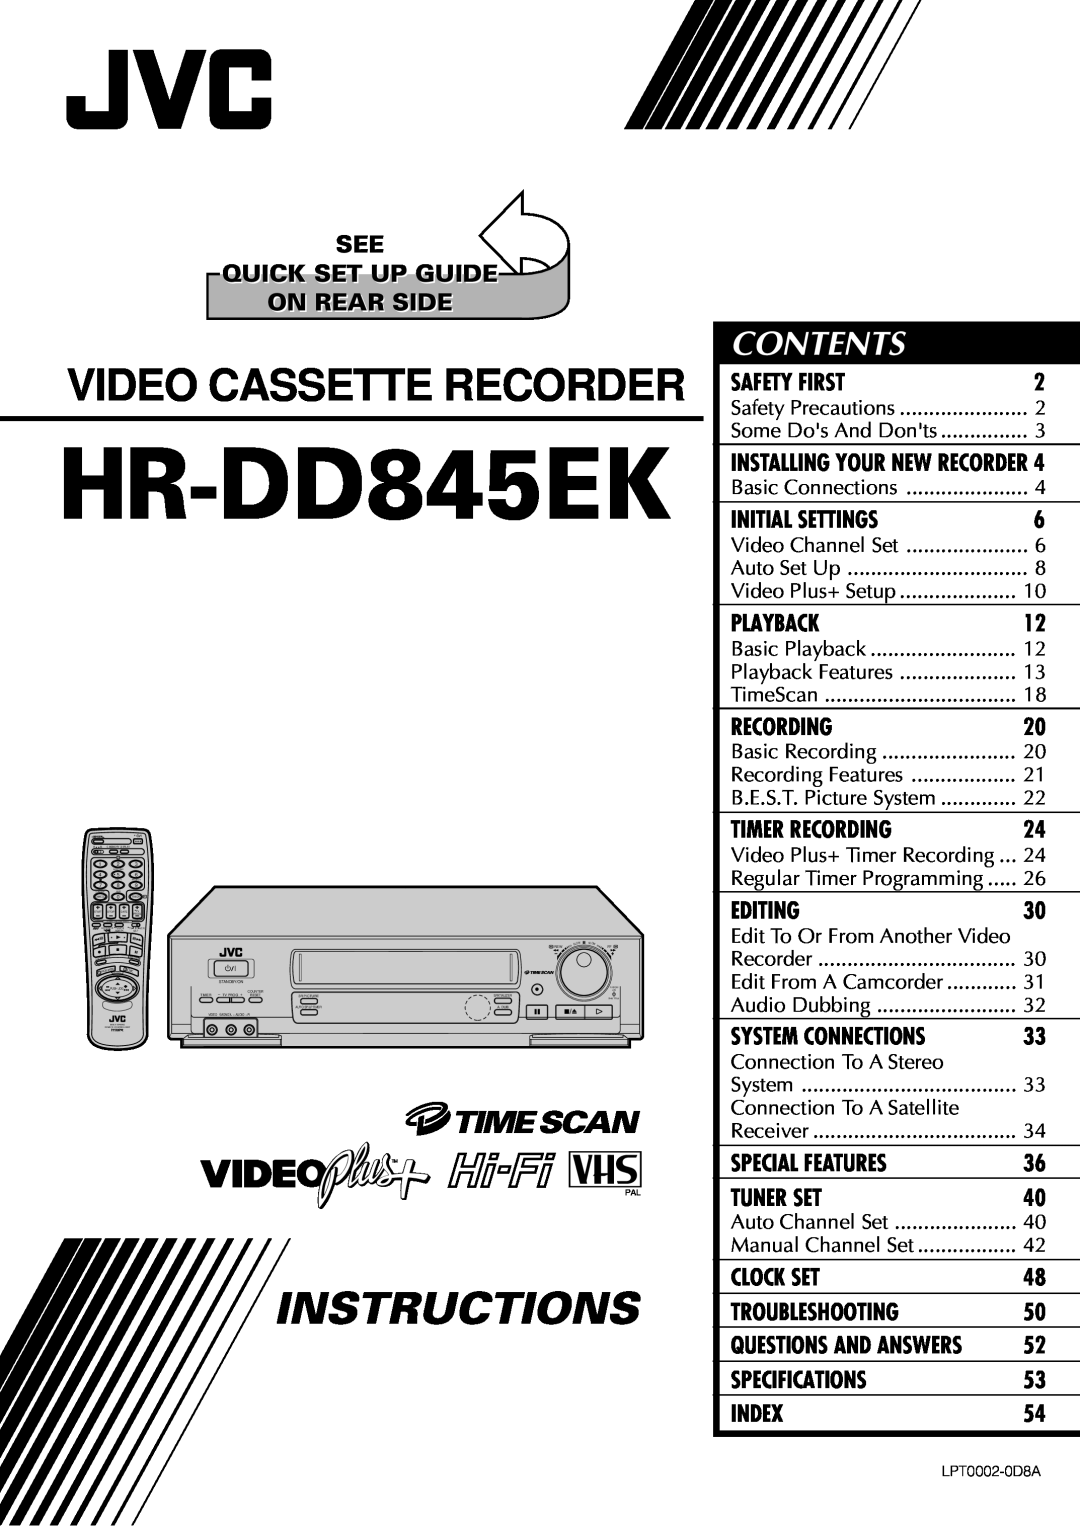 JVC HR-DD845EK setup guide Video Cassette Recorder, Instructions, Contents 